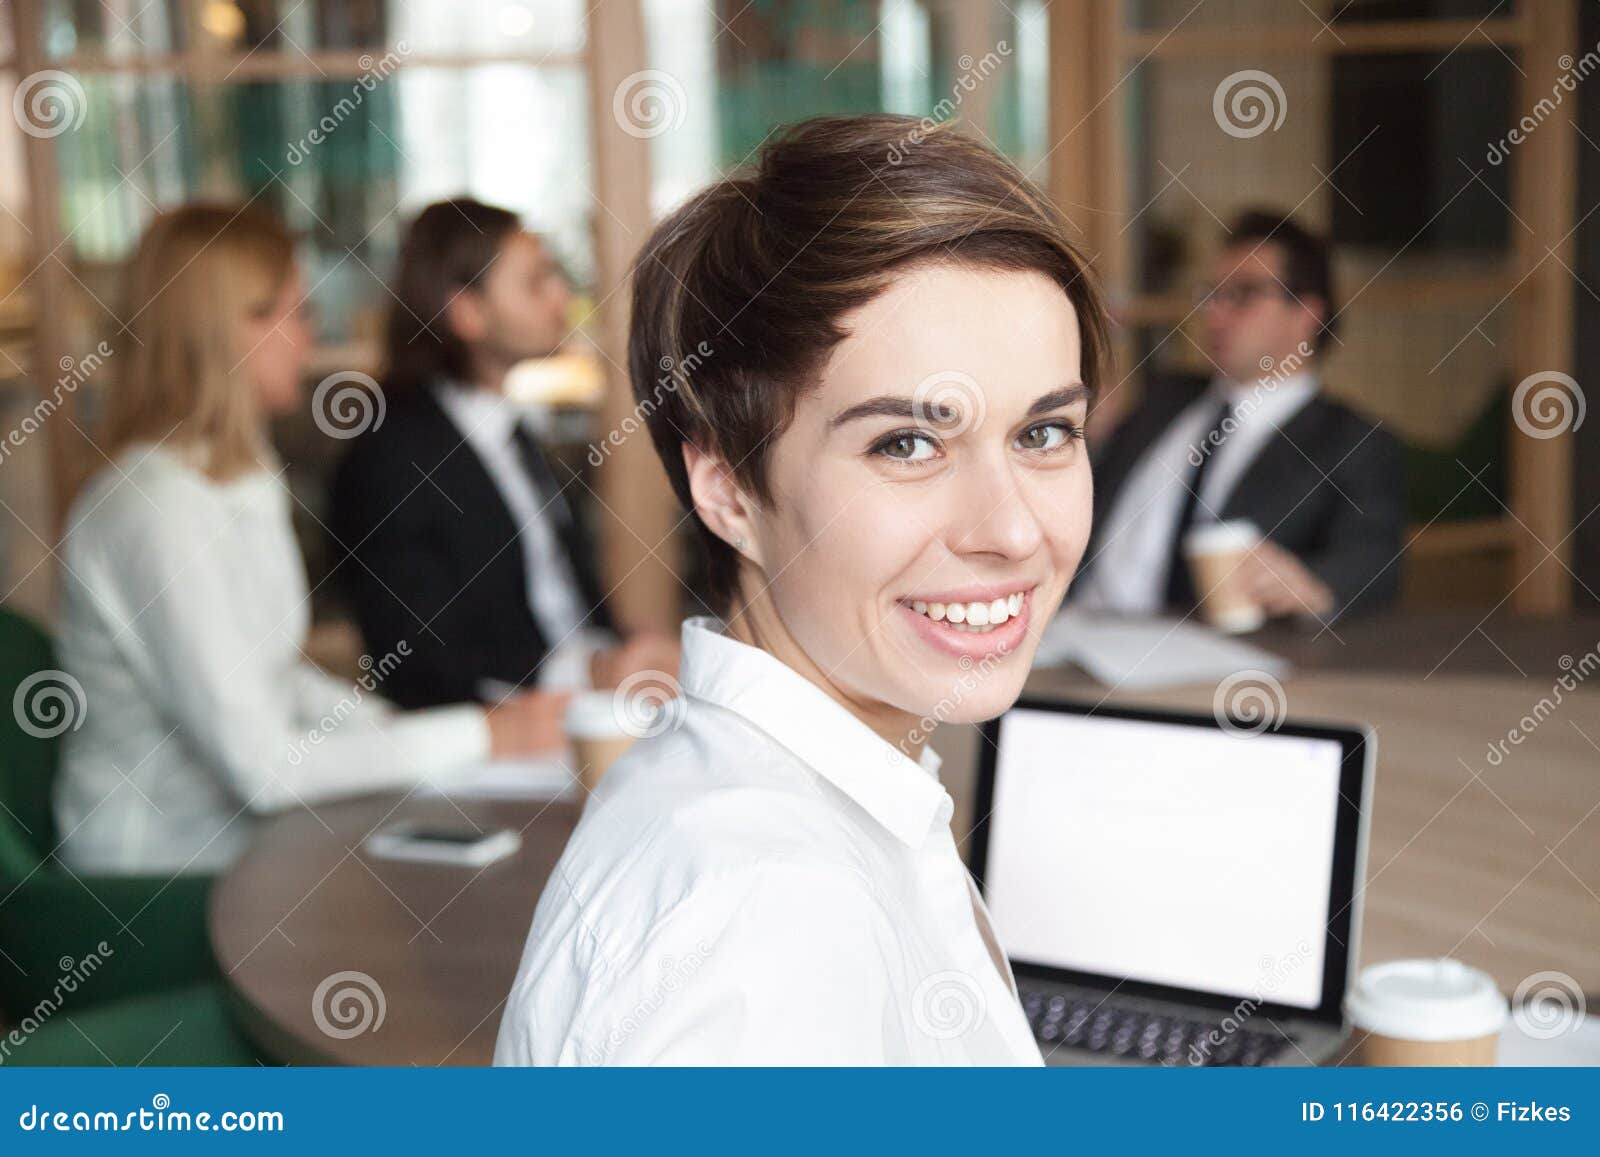 smiling businesswoman professional interpreter looking at camera